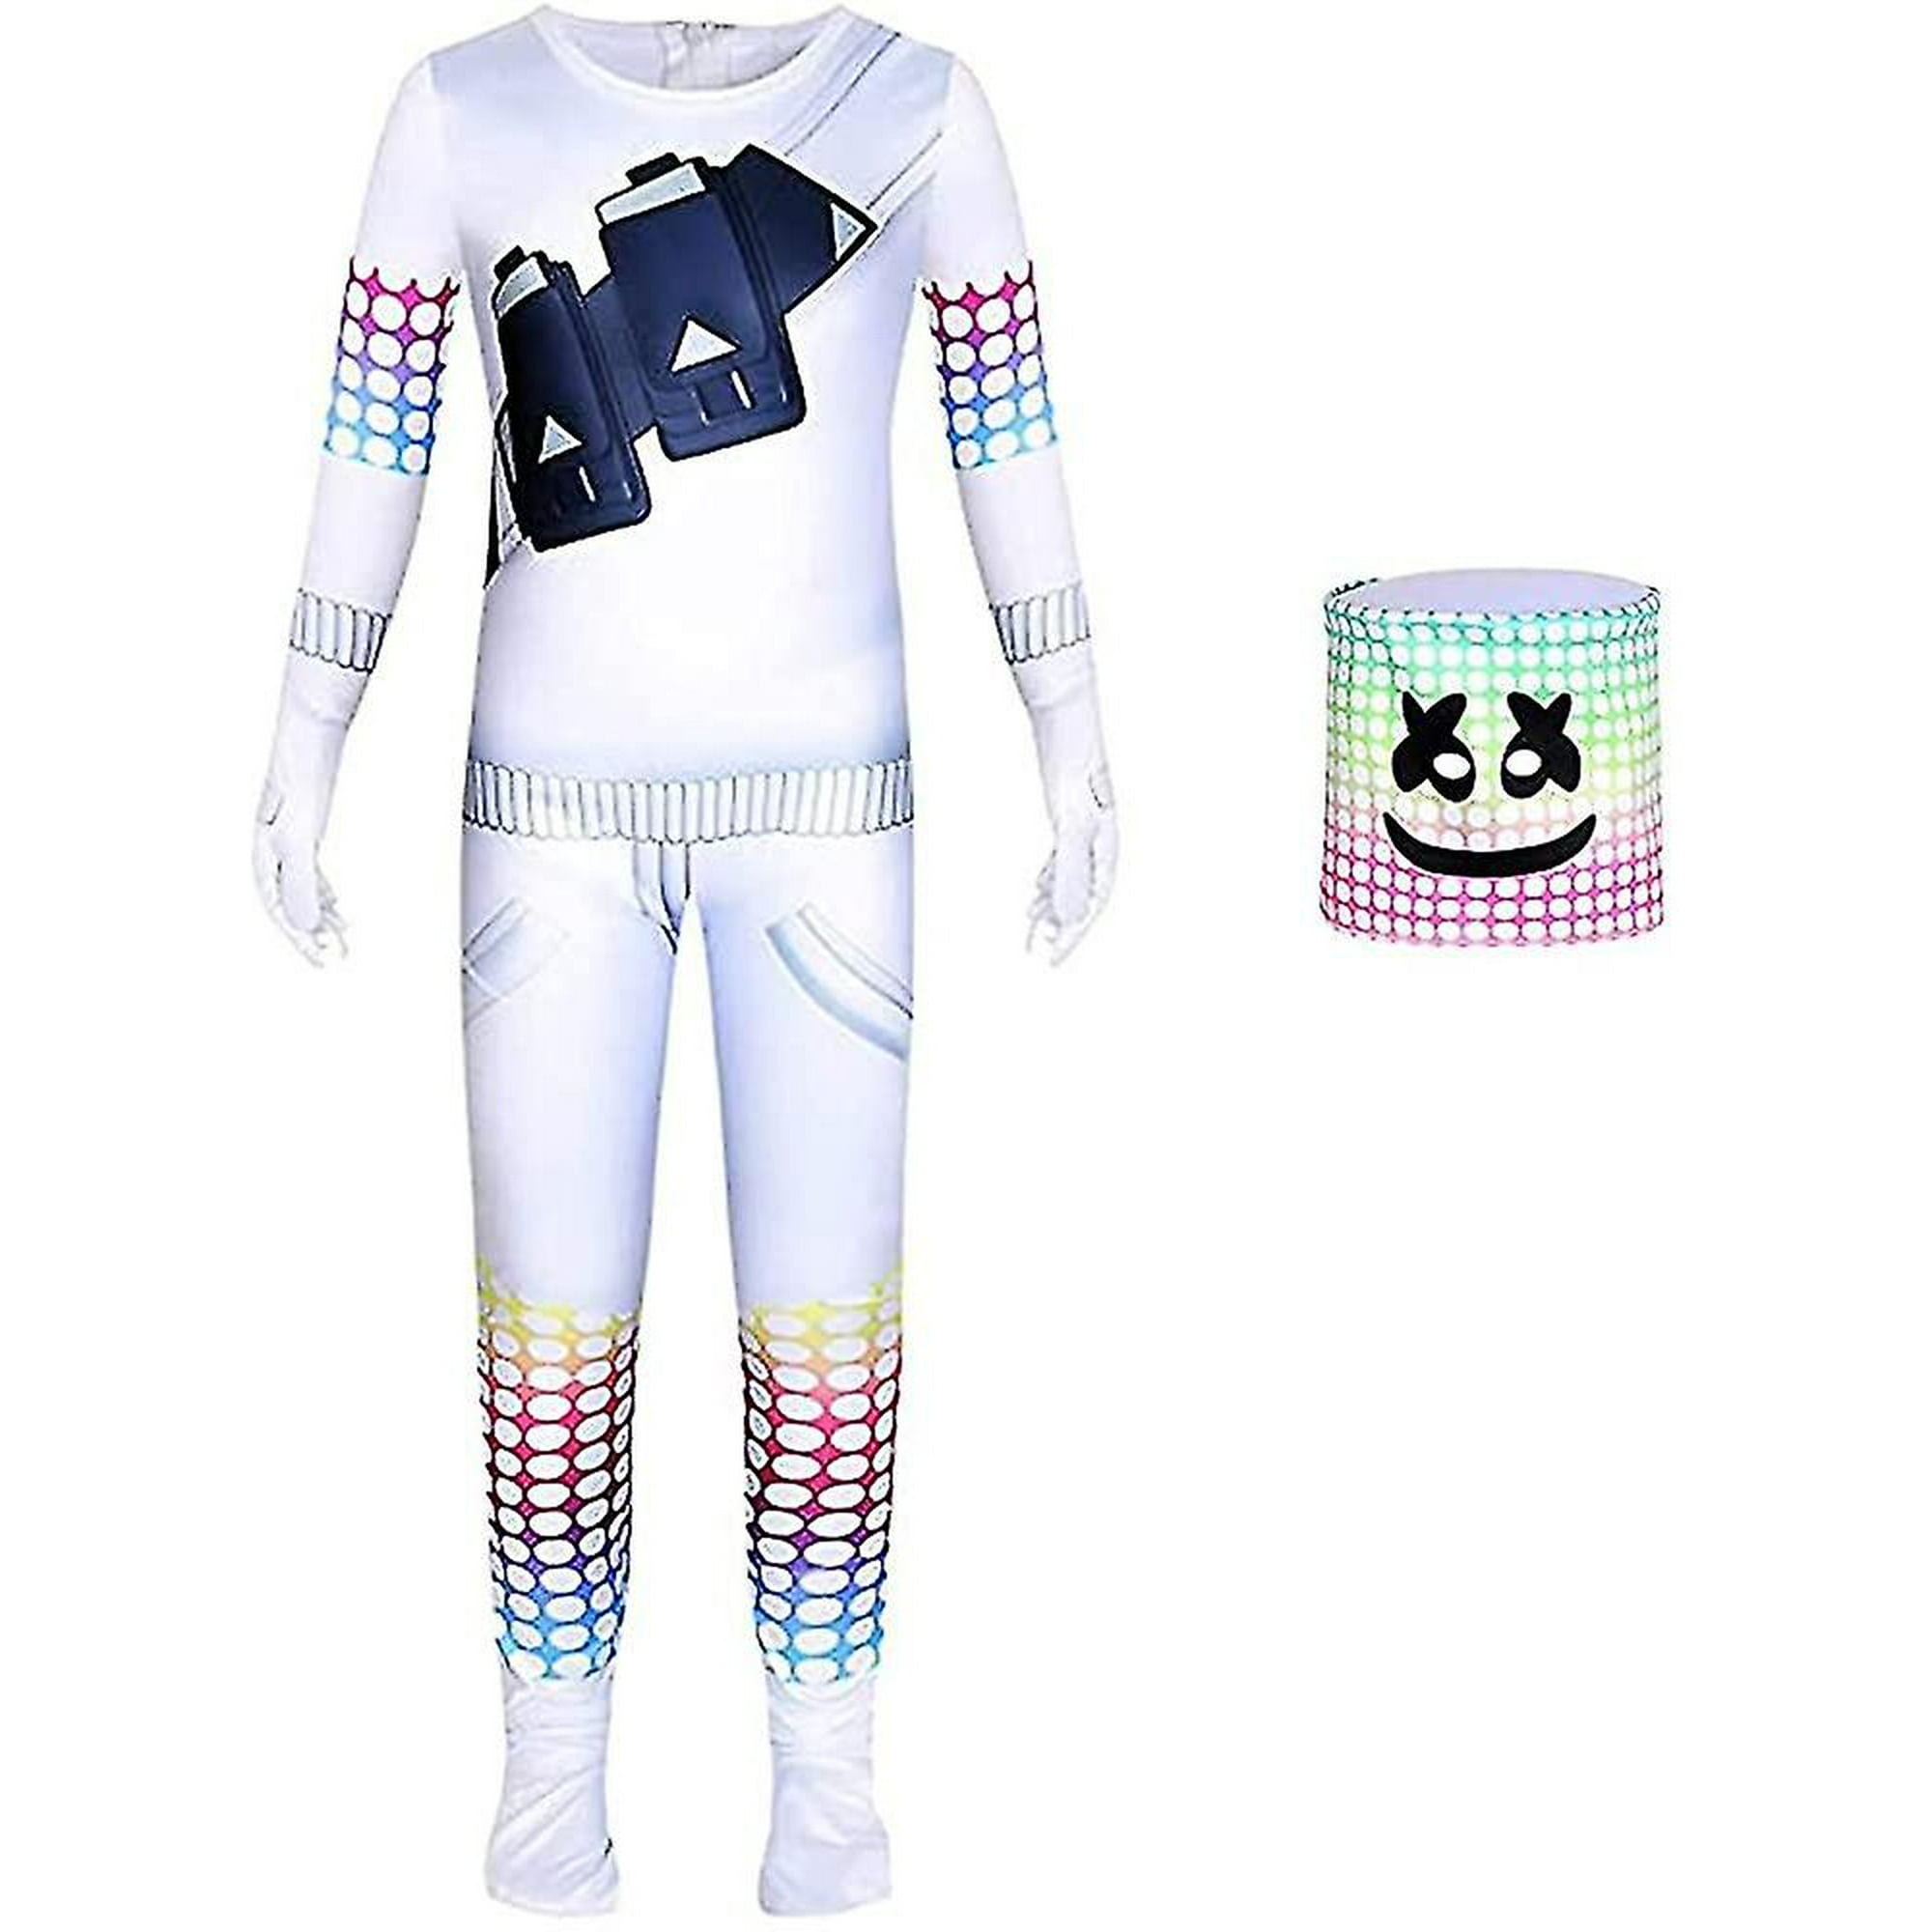 22 Trendiest Halloween Costumes That Kids Want Most In 2022 | Kids Teen Dj  Marshmello Mask Jumpsuit Costume-1 